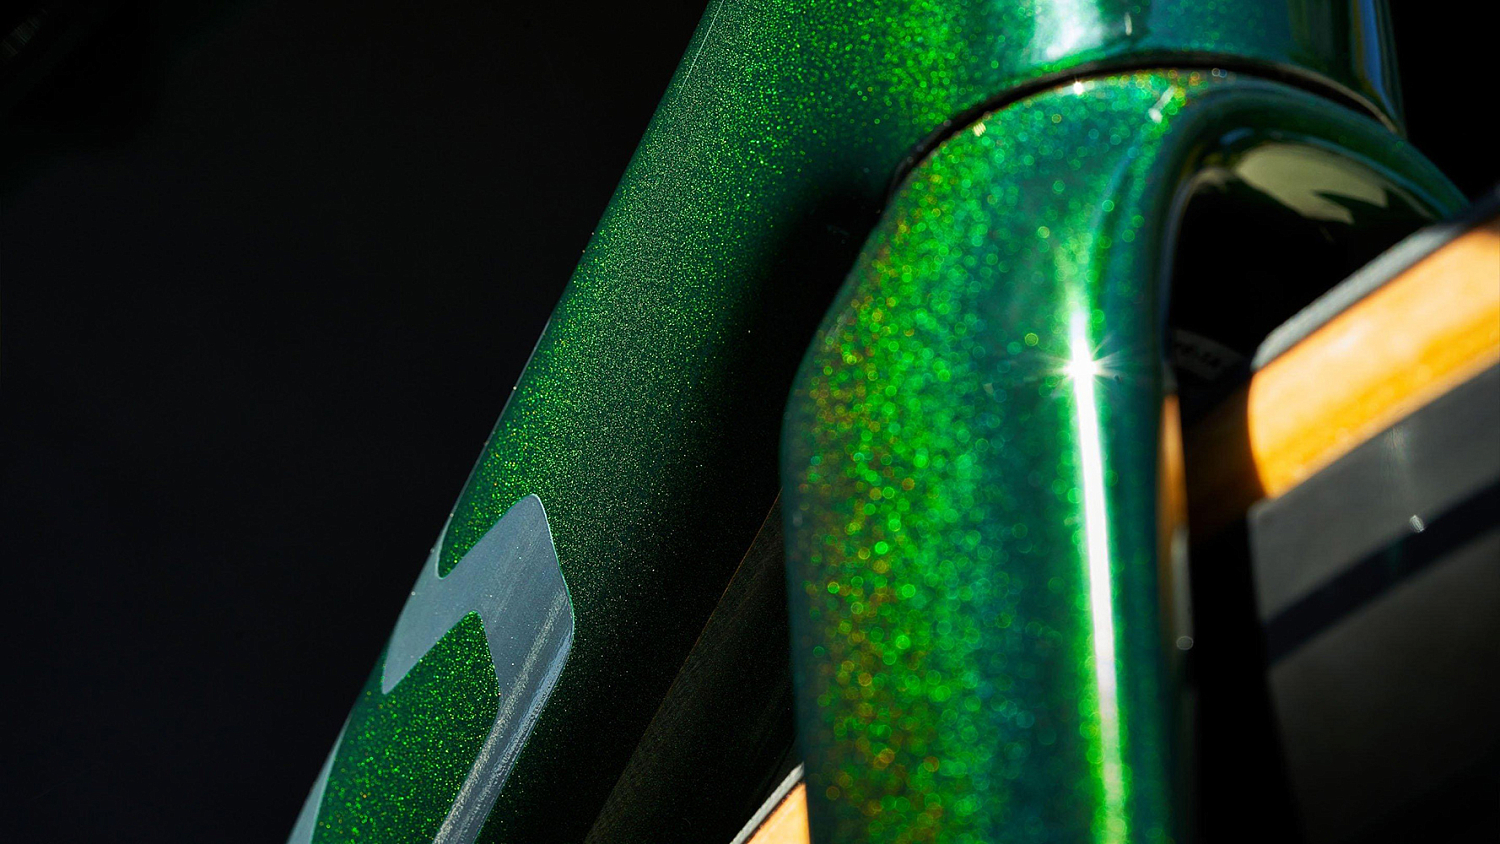 S-WORKS велосипеды шоссе Specialized S-Works Tarmac SL7 Sram Red Etap Axs 2021 Green Tint Fade over Spectraflair/Chrome Артикул 94920-0344, 94920-0349, 94920-0352, 94920-0354, 94920-0356, 94920-0358, 94920-0361